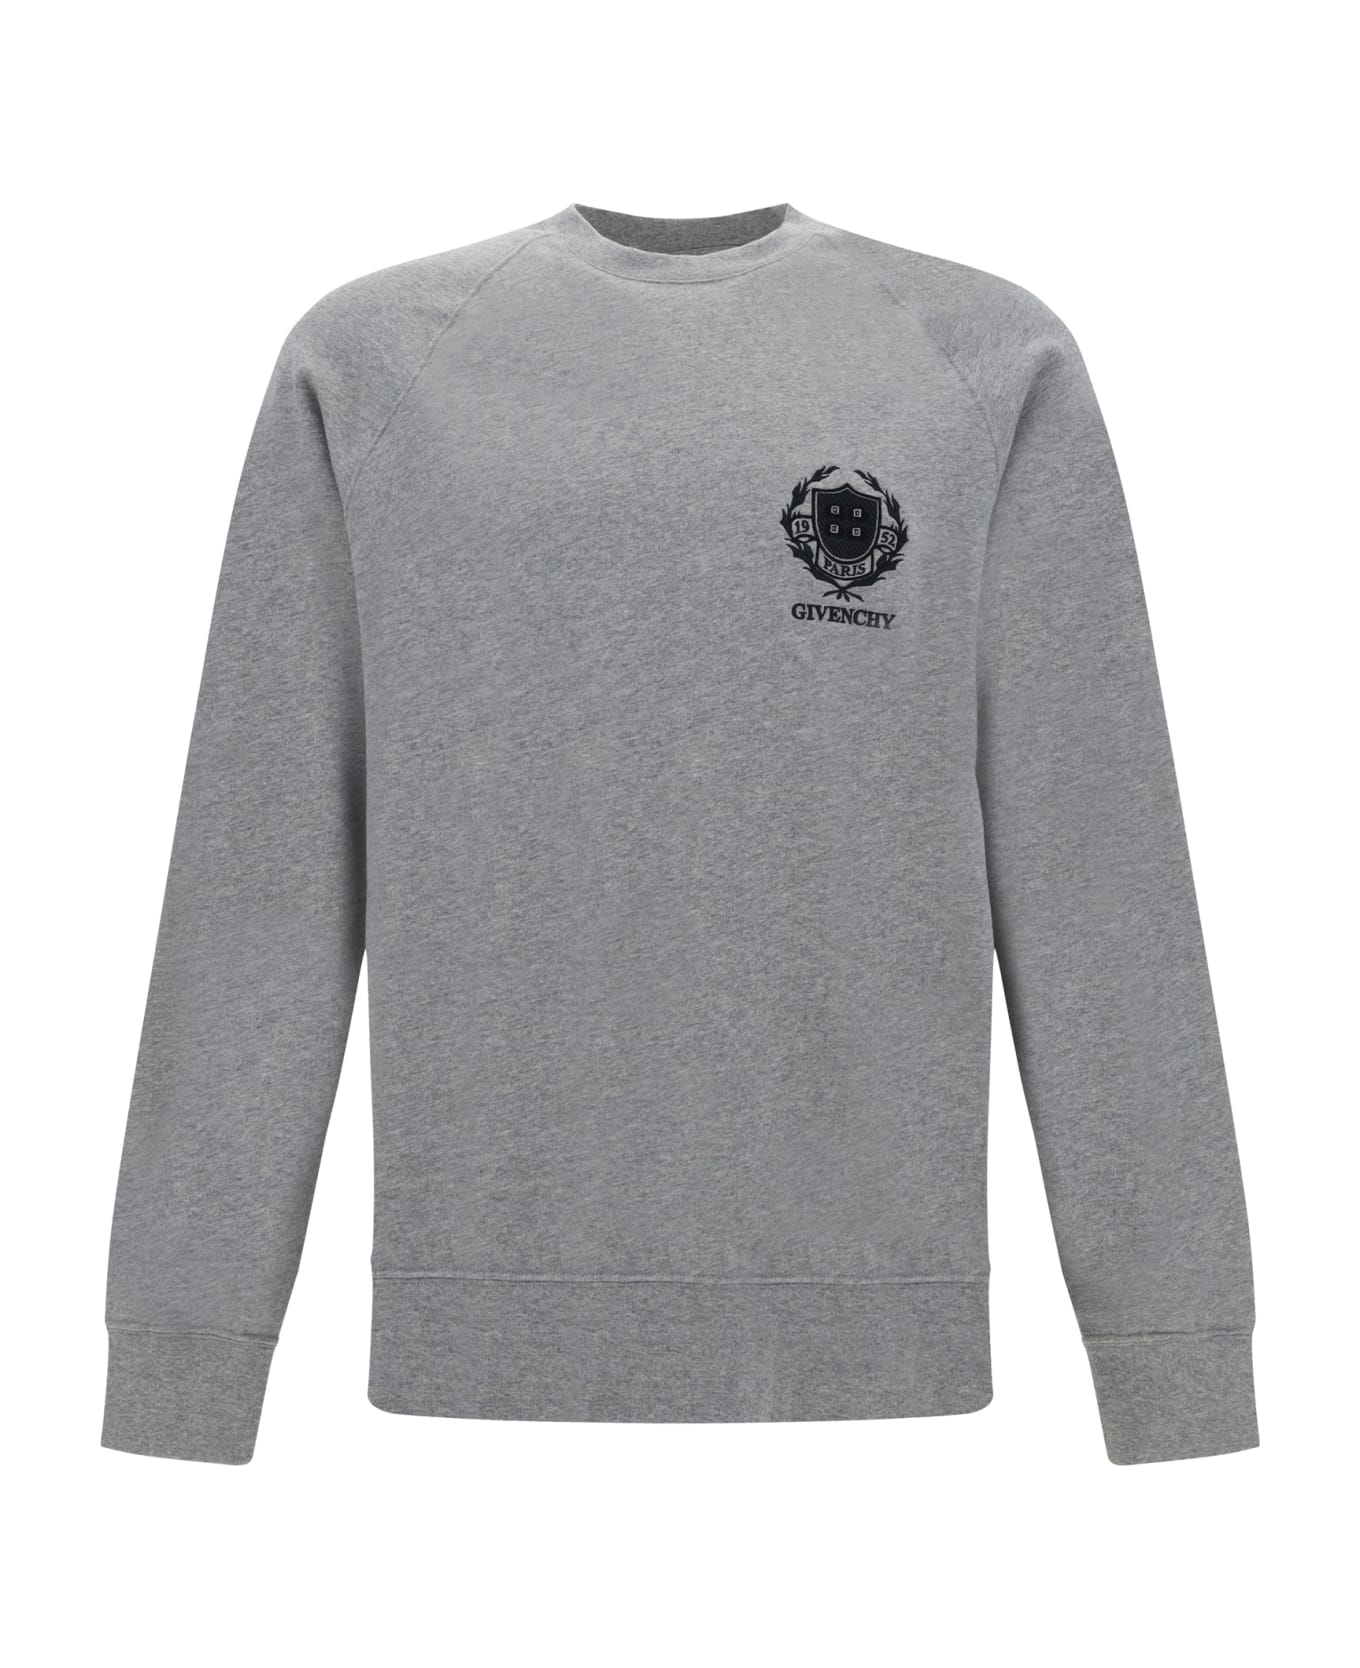 Givenchy Slim Sweatshirt - Light Grey Melang